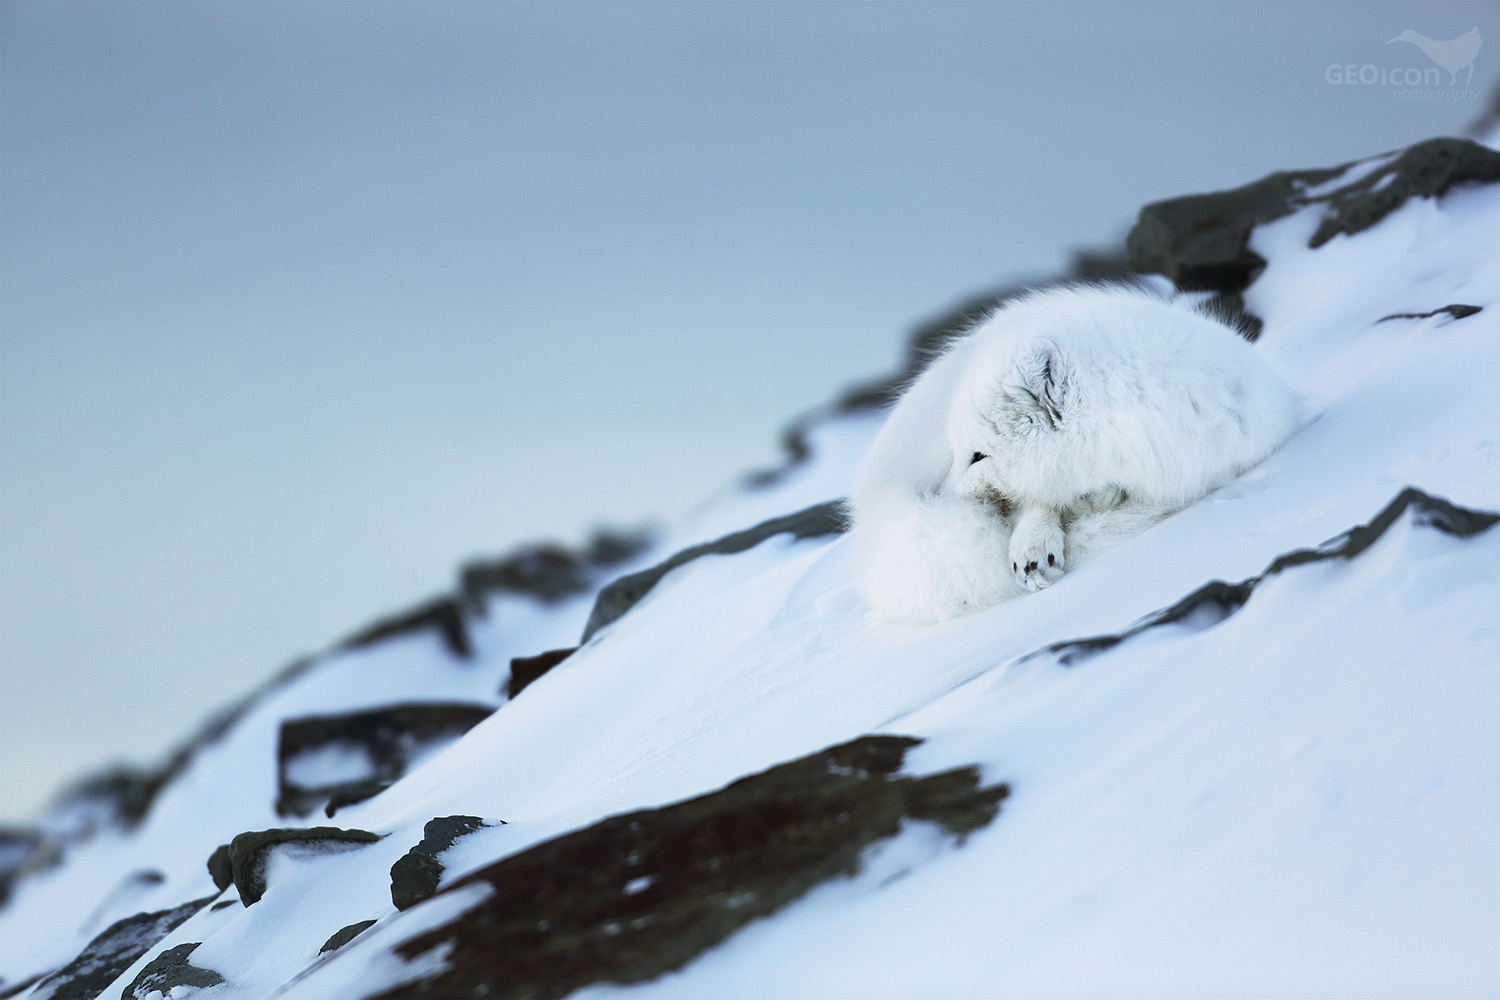 Polar fox / liška polární (Vulpes lagopus)